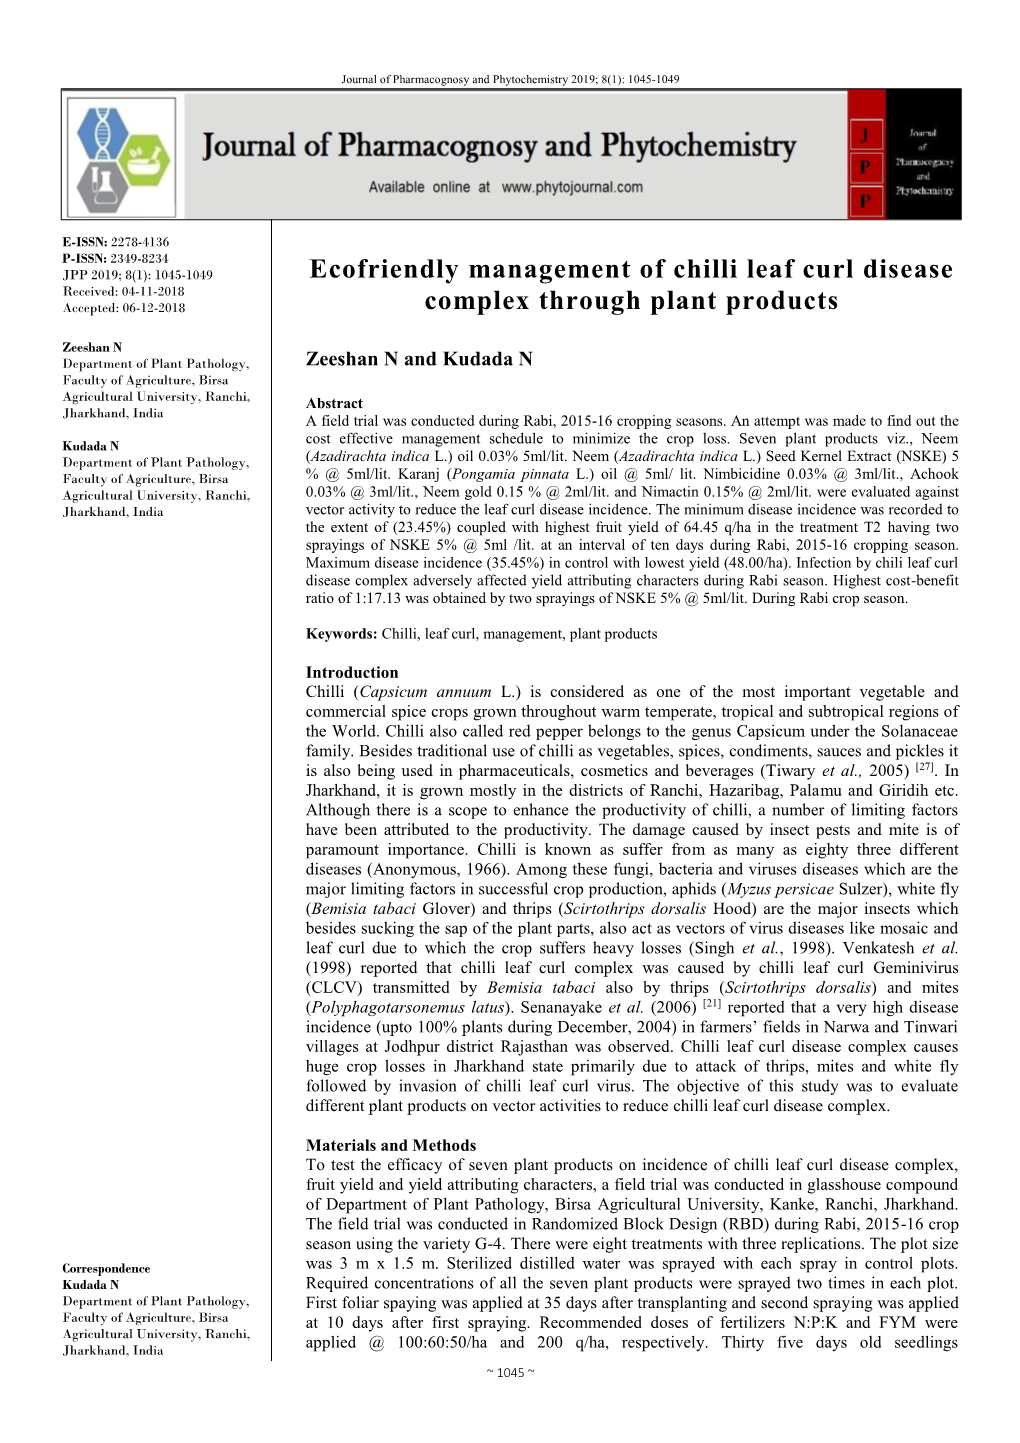 Ecofriendly Management of Chilli Leaf Curl Disease Complex Through Plant Products